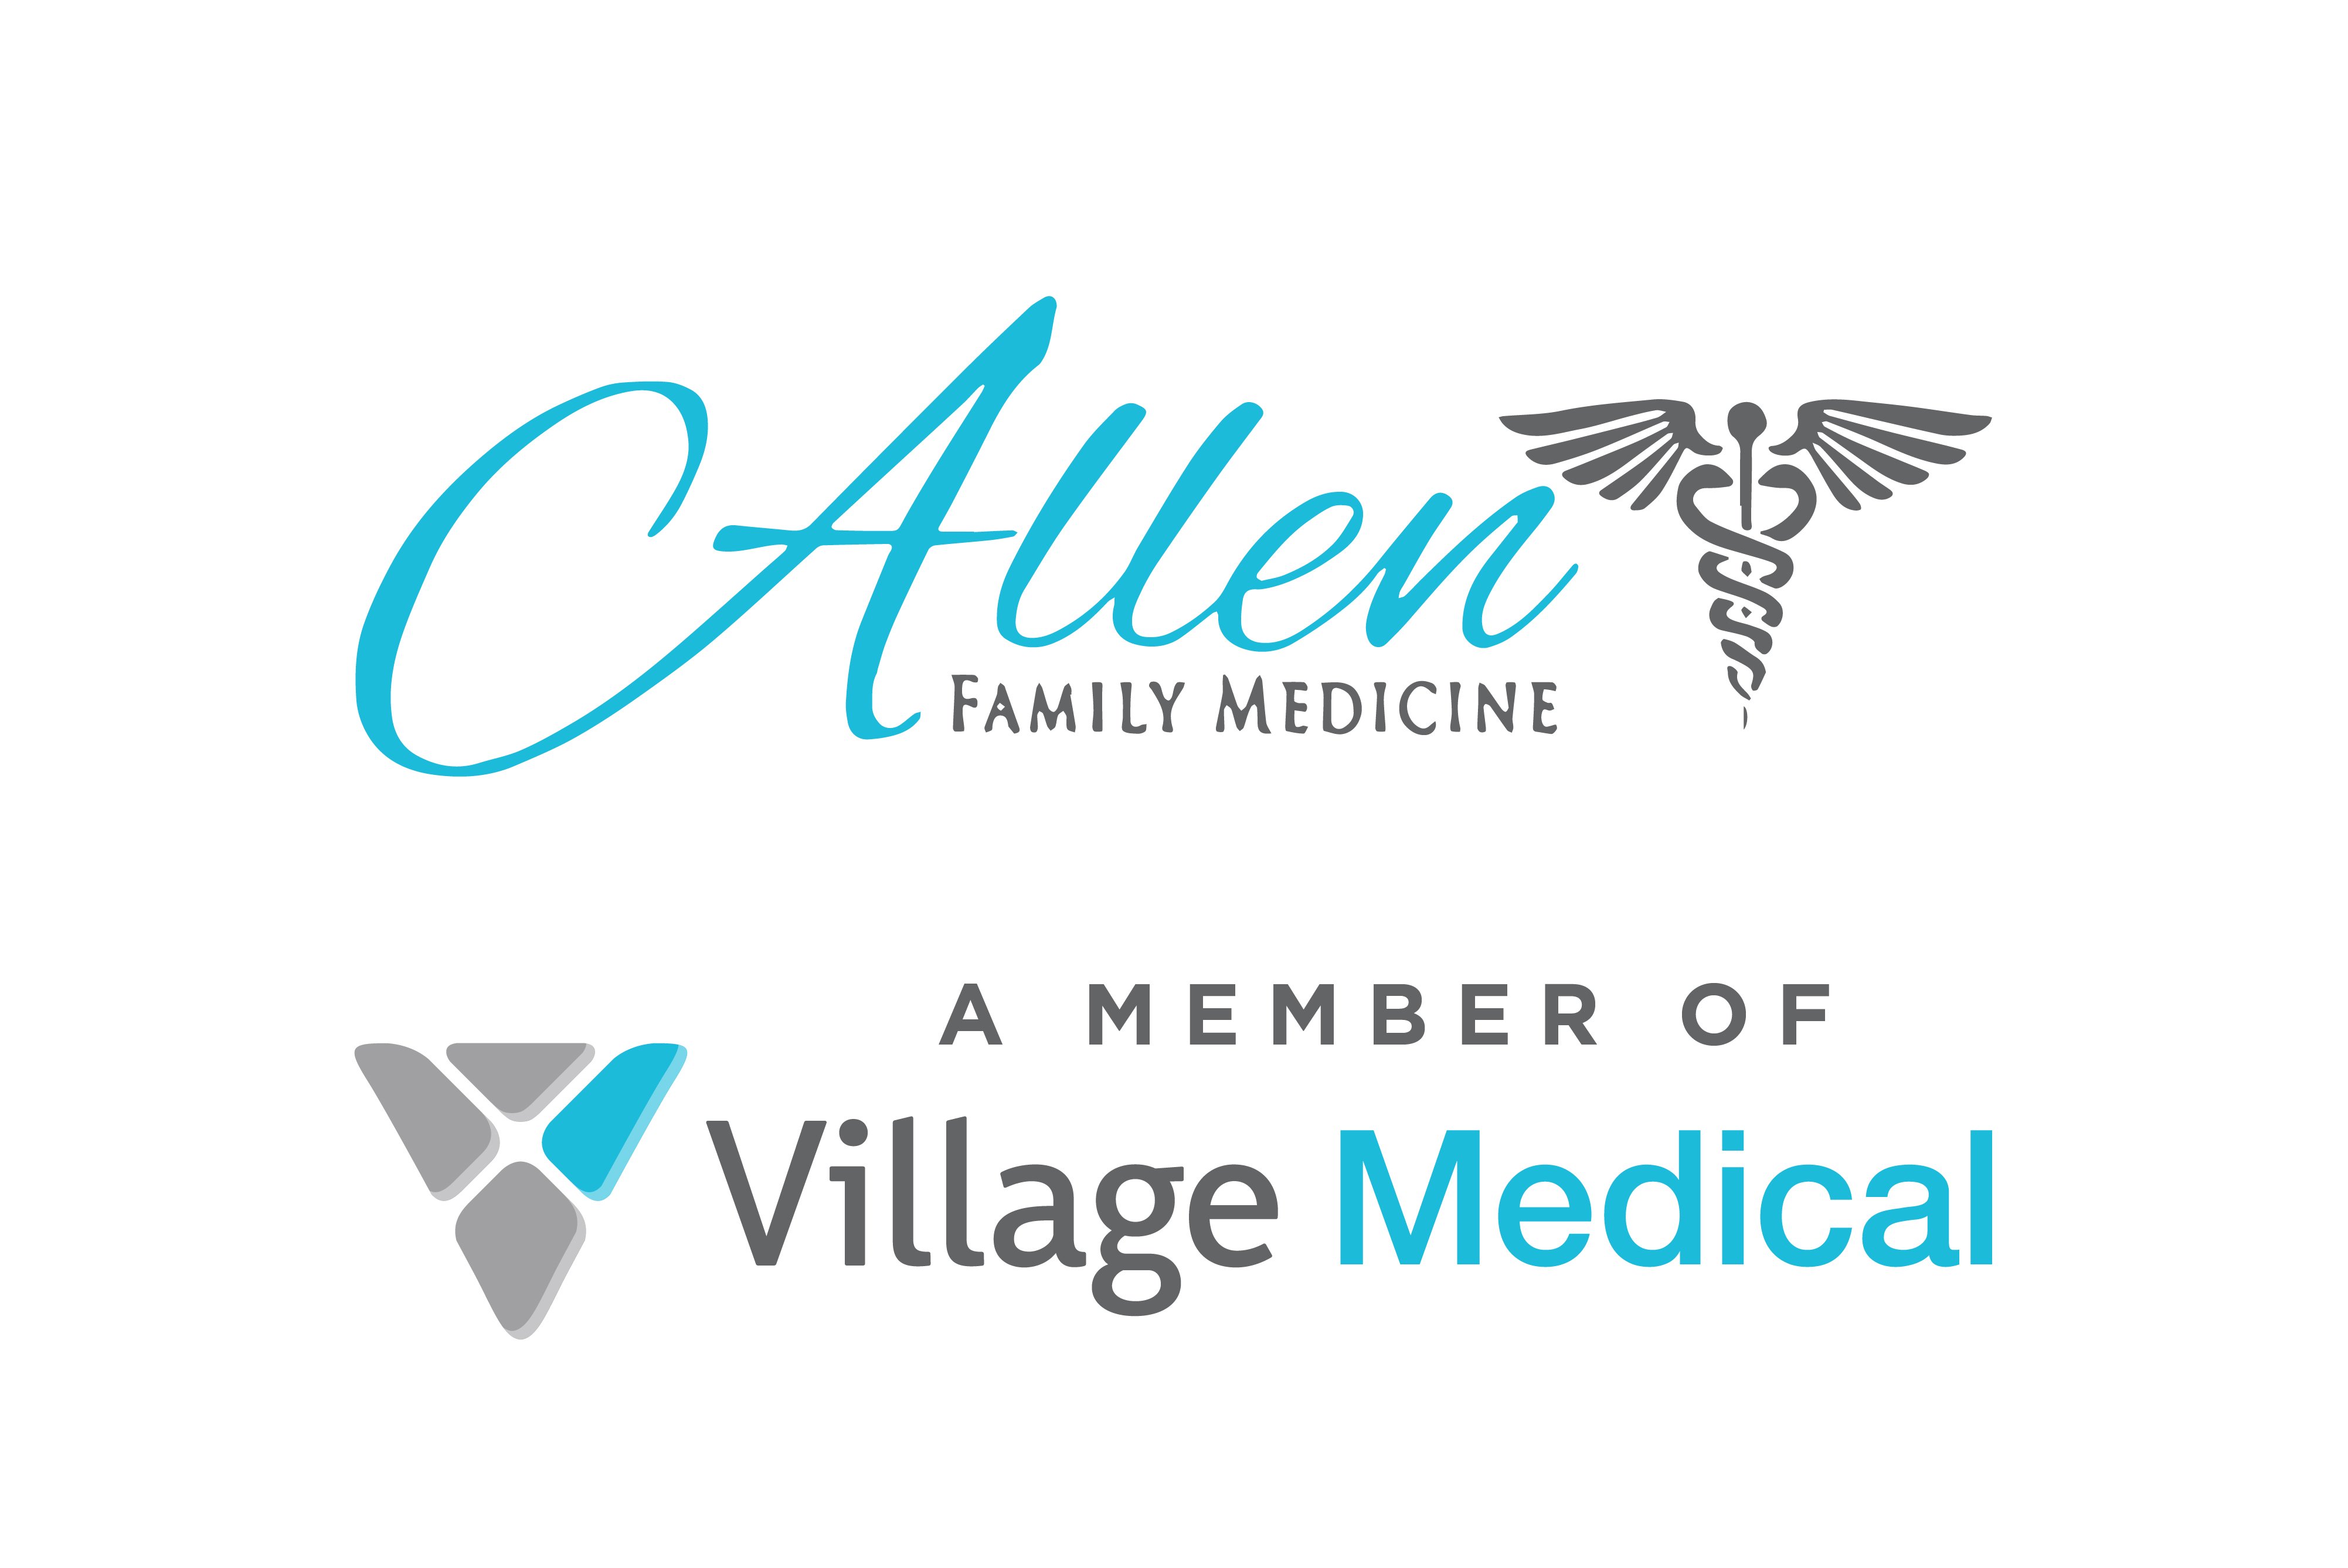 Village Medical Allen Family Medicine  - 7233 E. Baseline Rd. Suite 126 Mesa, AZ 85209